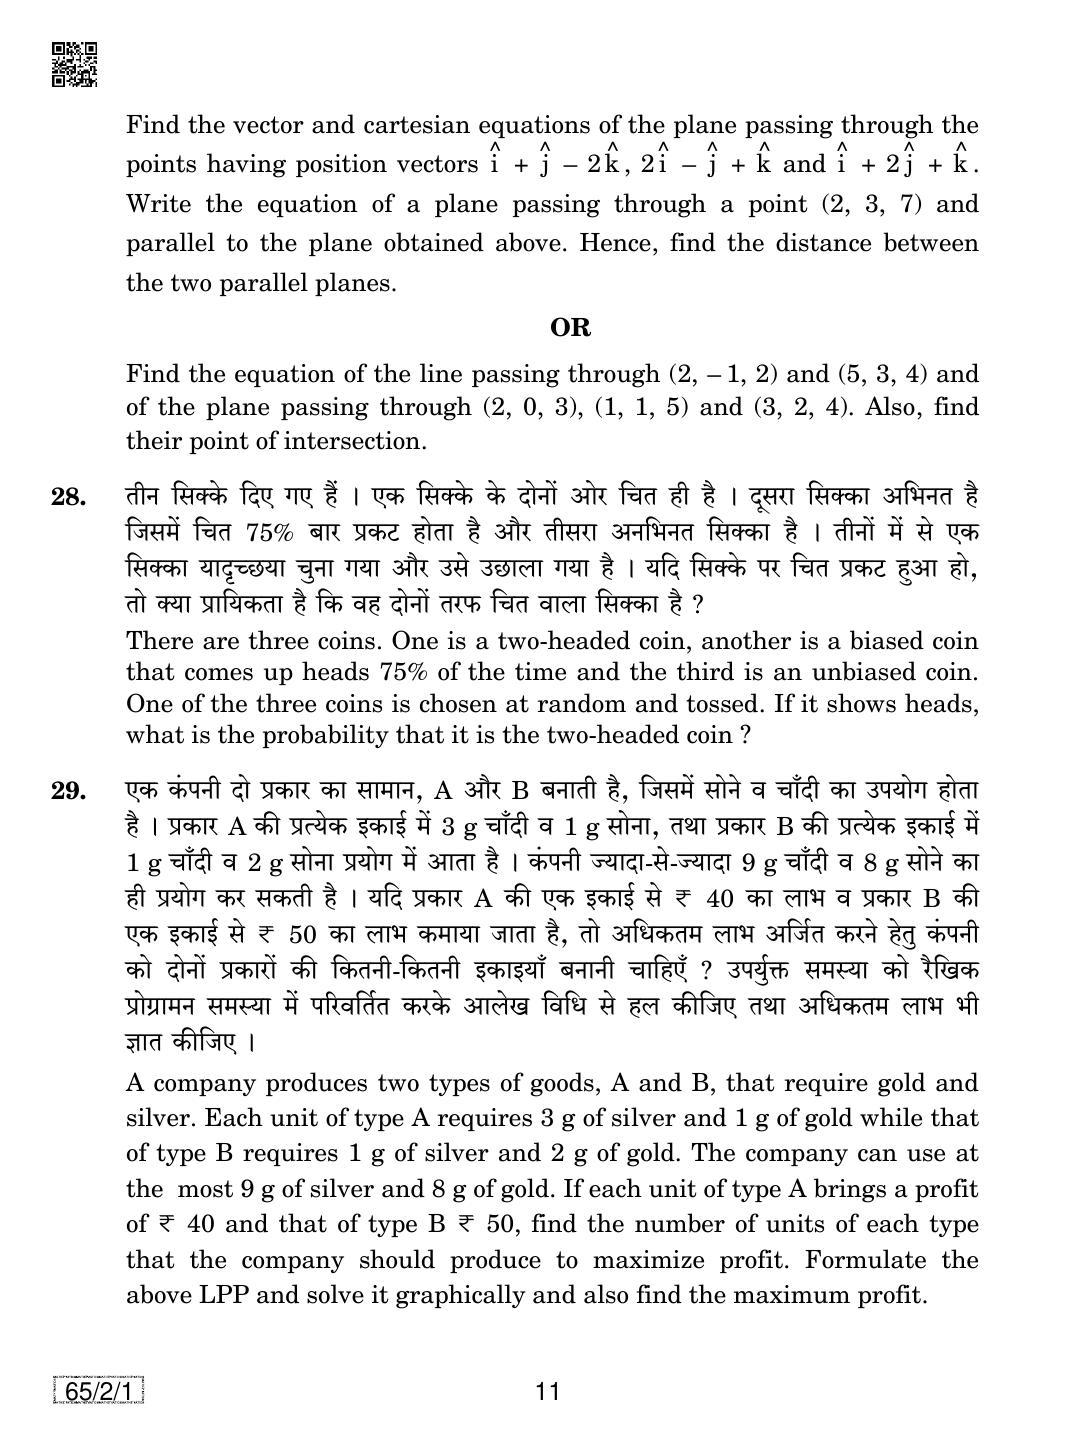 CBSE Class 12 65-2-1 Mathematics 2019 Question Paper - Page 11